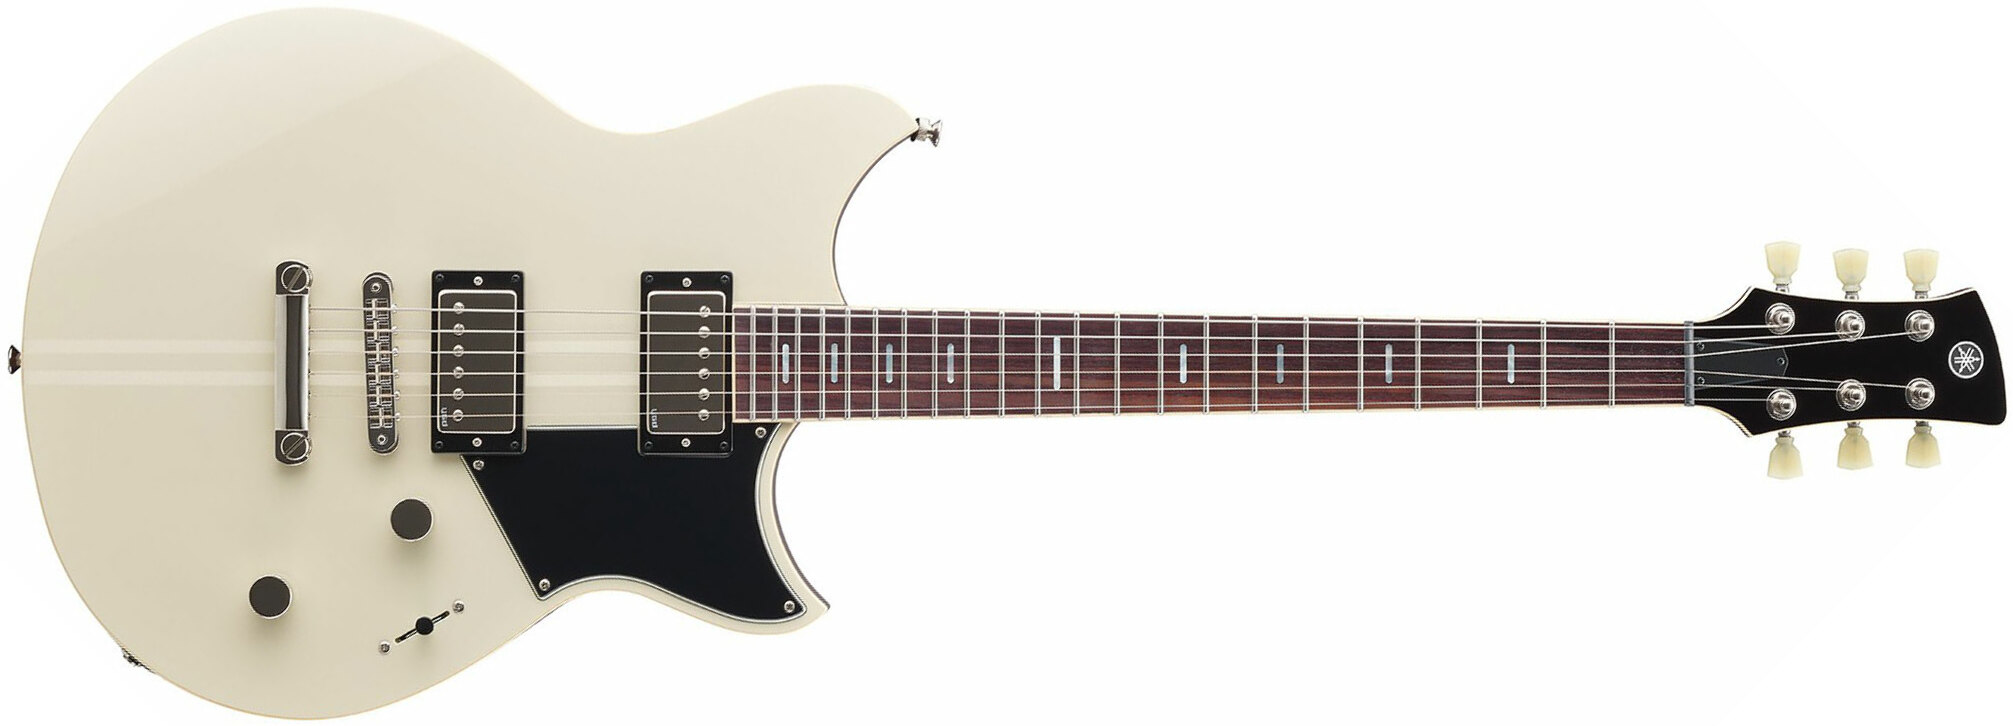 Yamaha Rss20 Revstar Standard Hh Ht Rw - Vintage White - Double cut electric guitar - Main picture